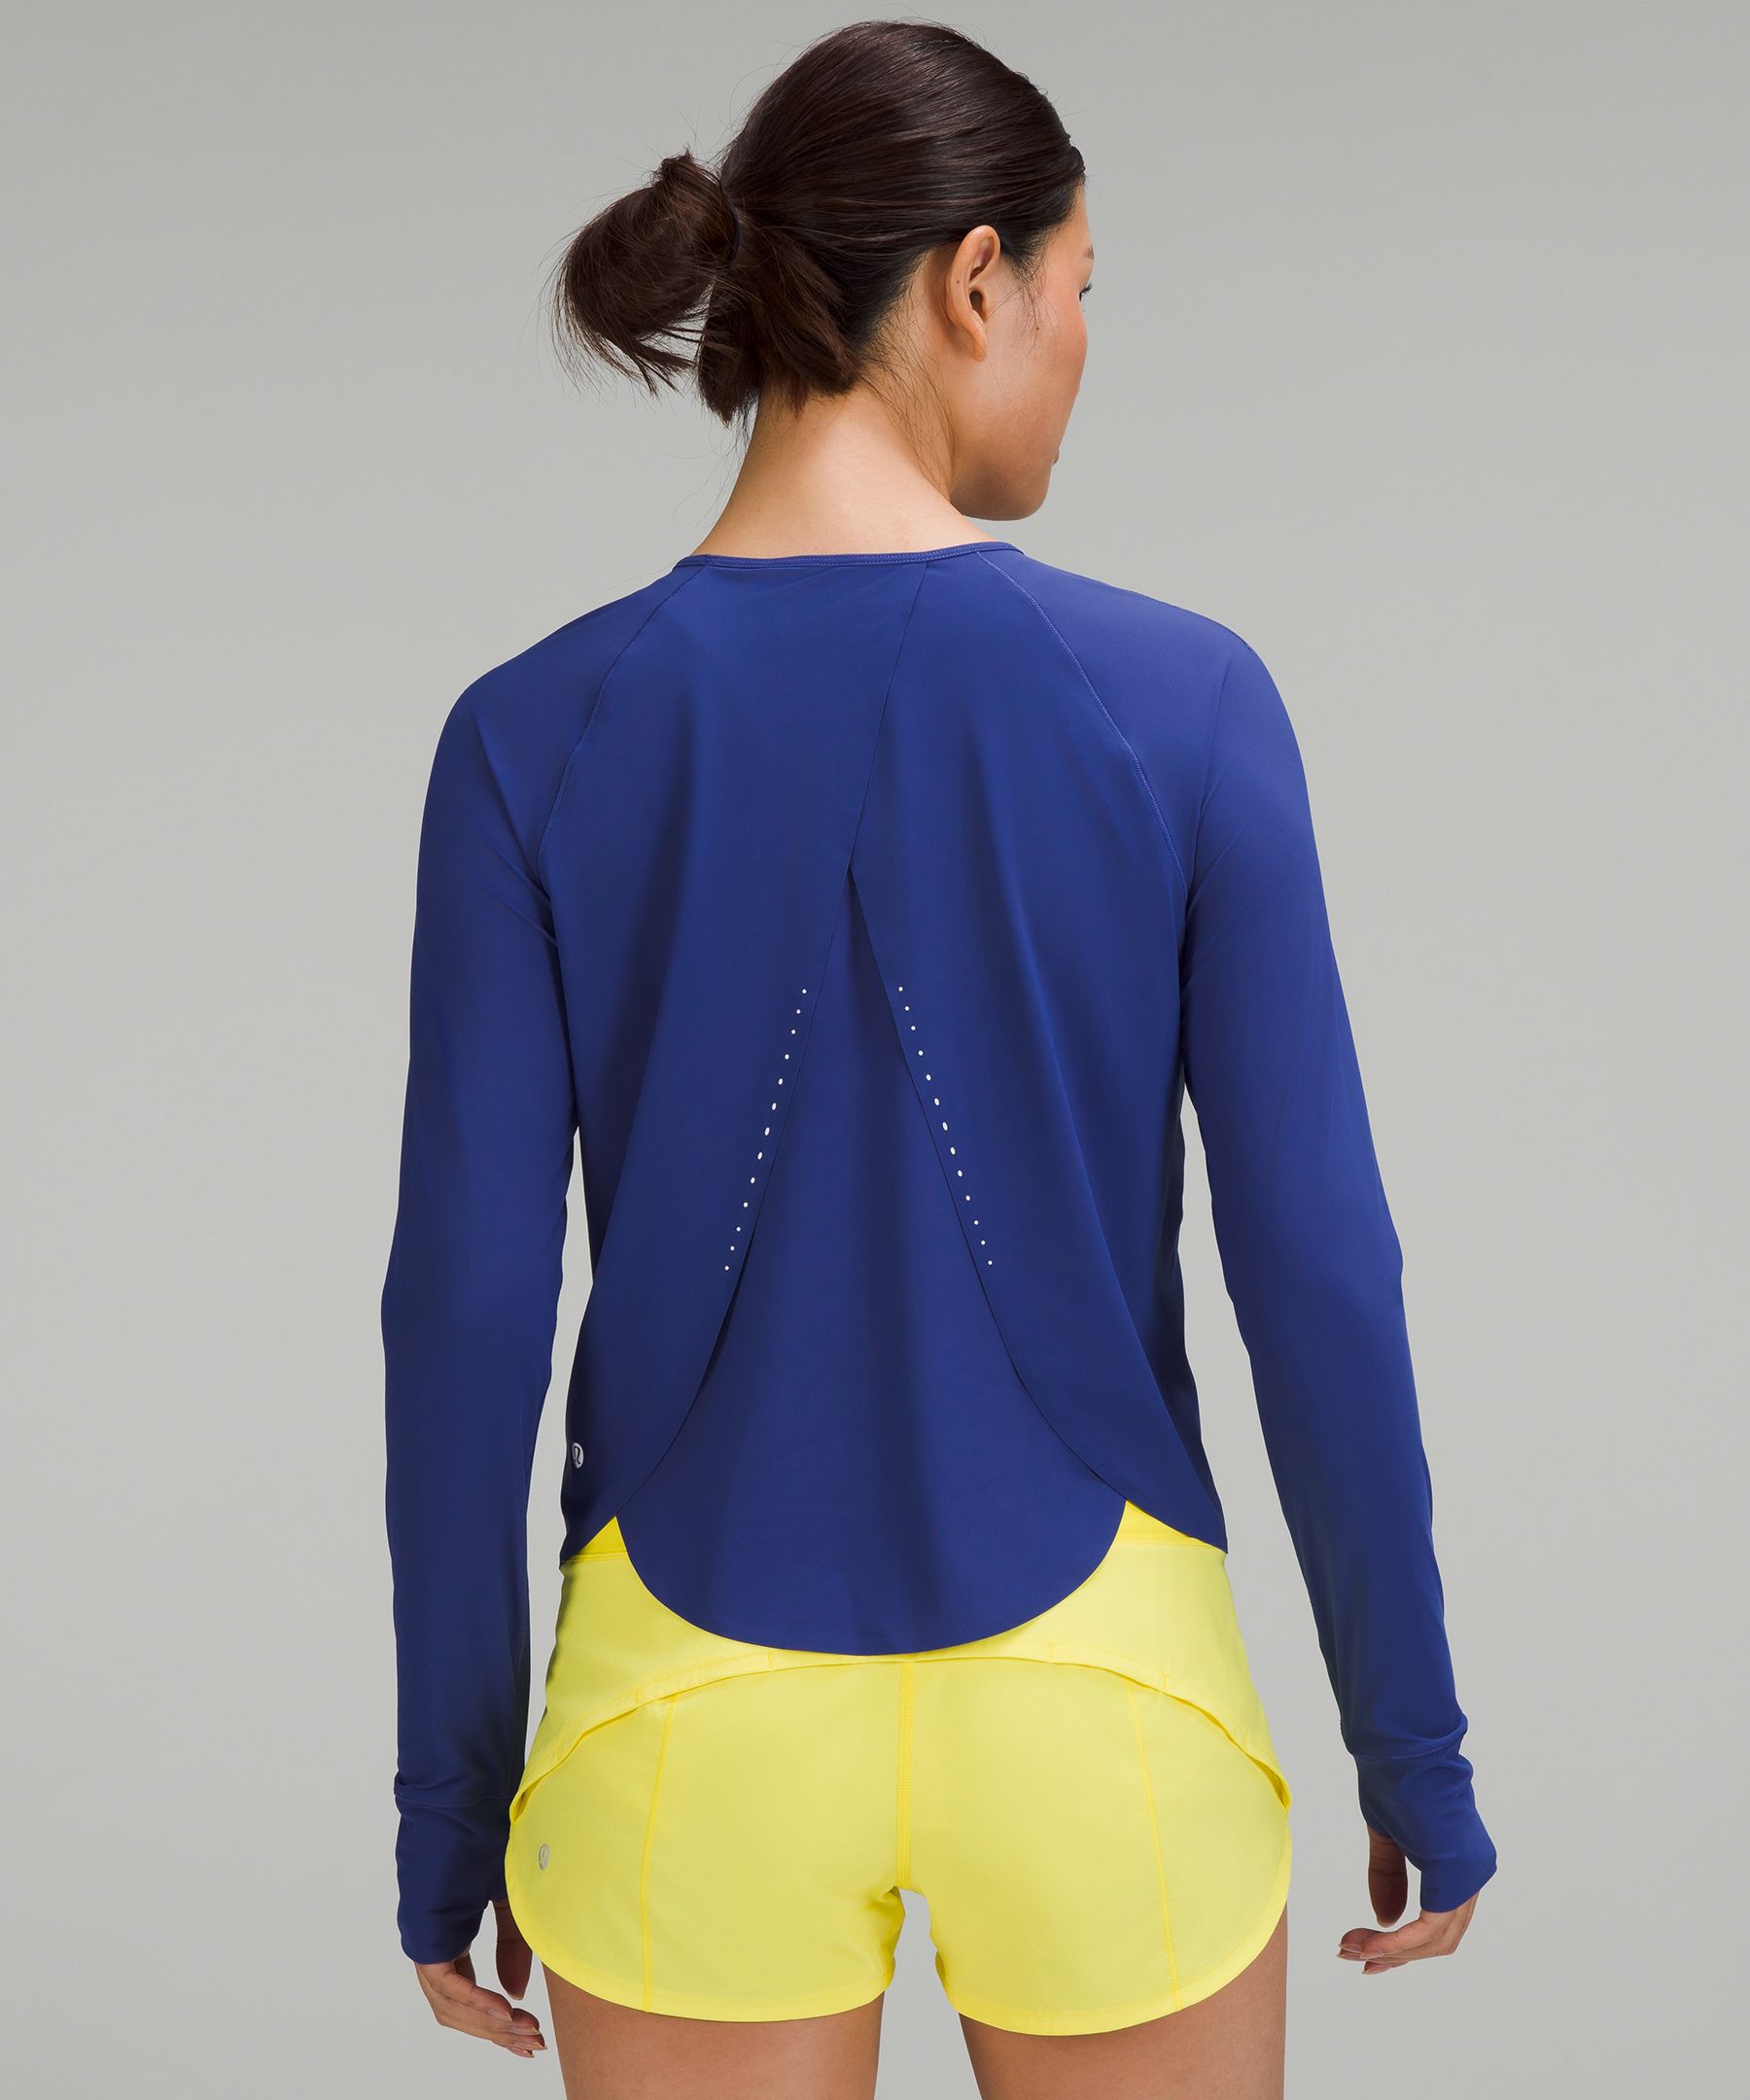 Lululemon UV Protection Long Sleeve - Athletic apparel